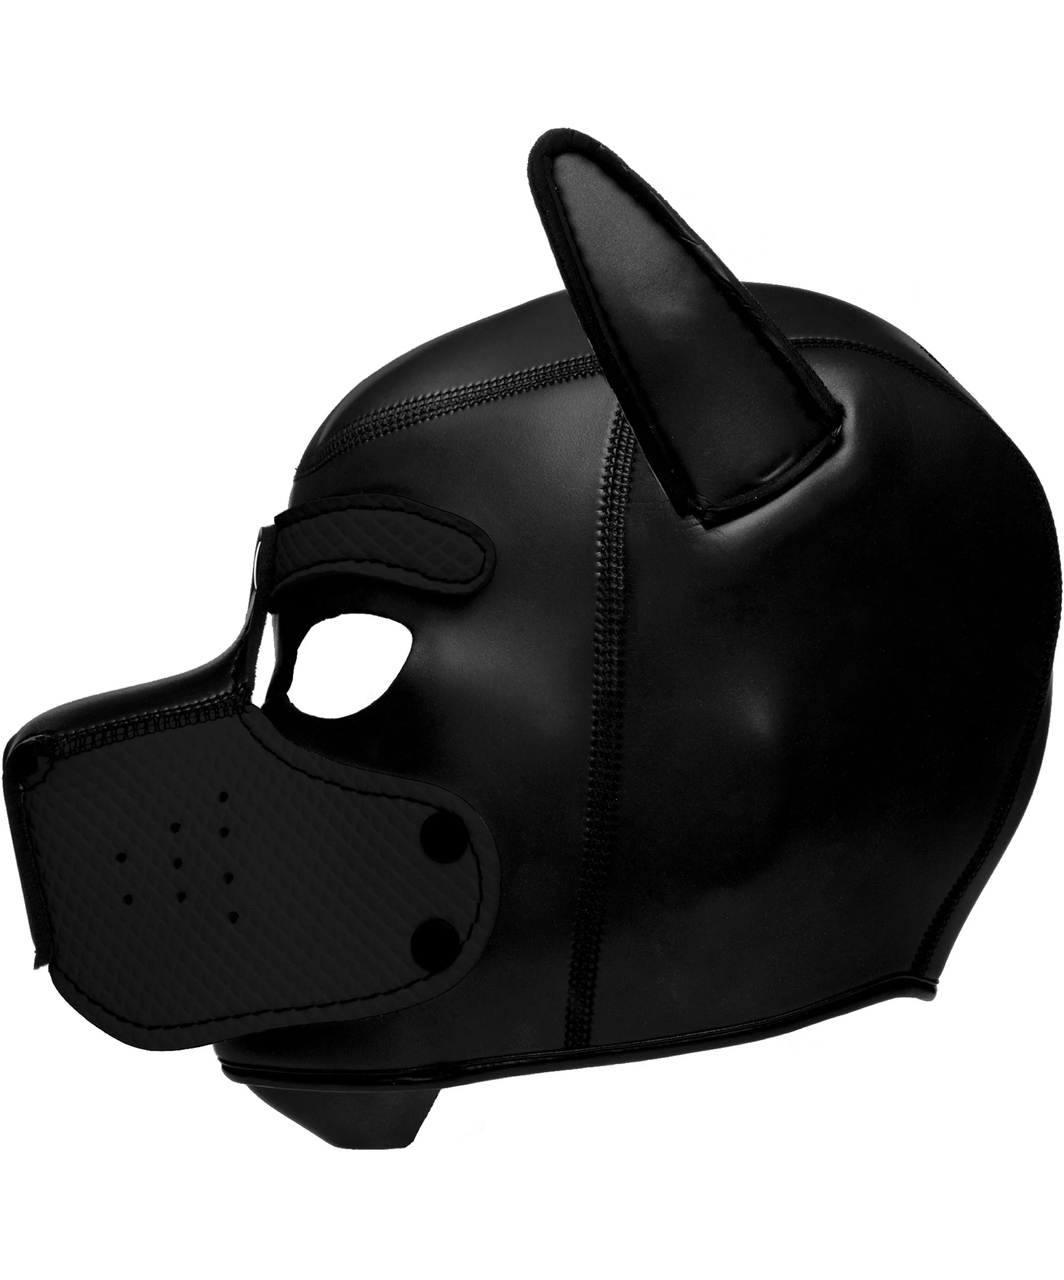 Darkness melna neoprēna suņa maska ar uzpurni